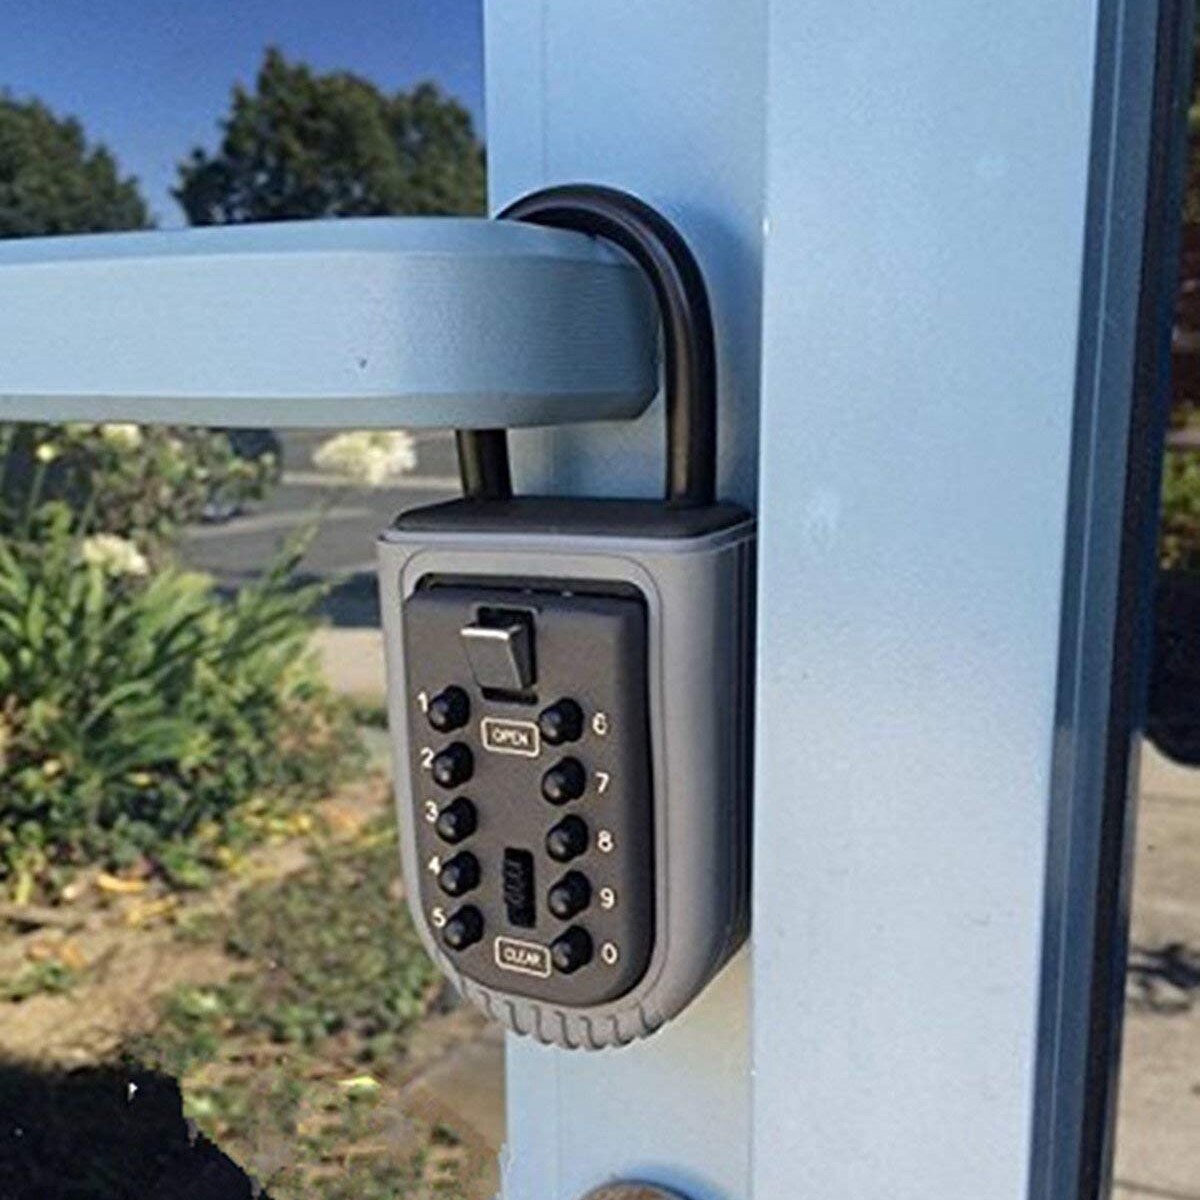 Key Lock Box Storage Combination Key Safe Box Push Button Set Your Own Combination Padlock Security Key Lock Box for Home - ebowsos